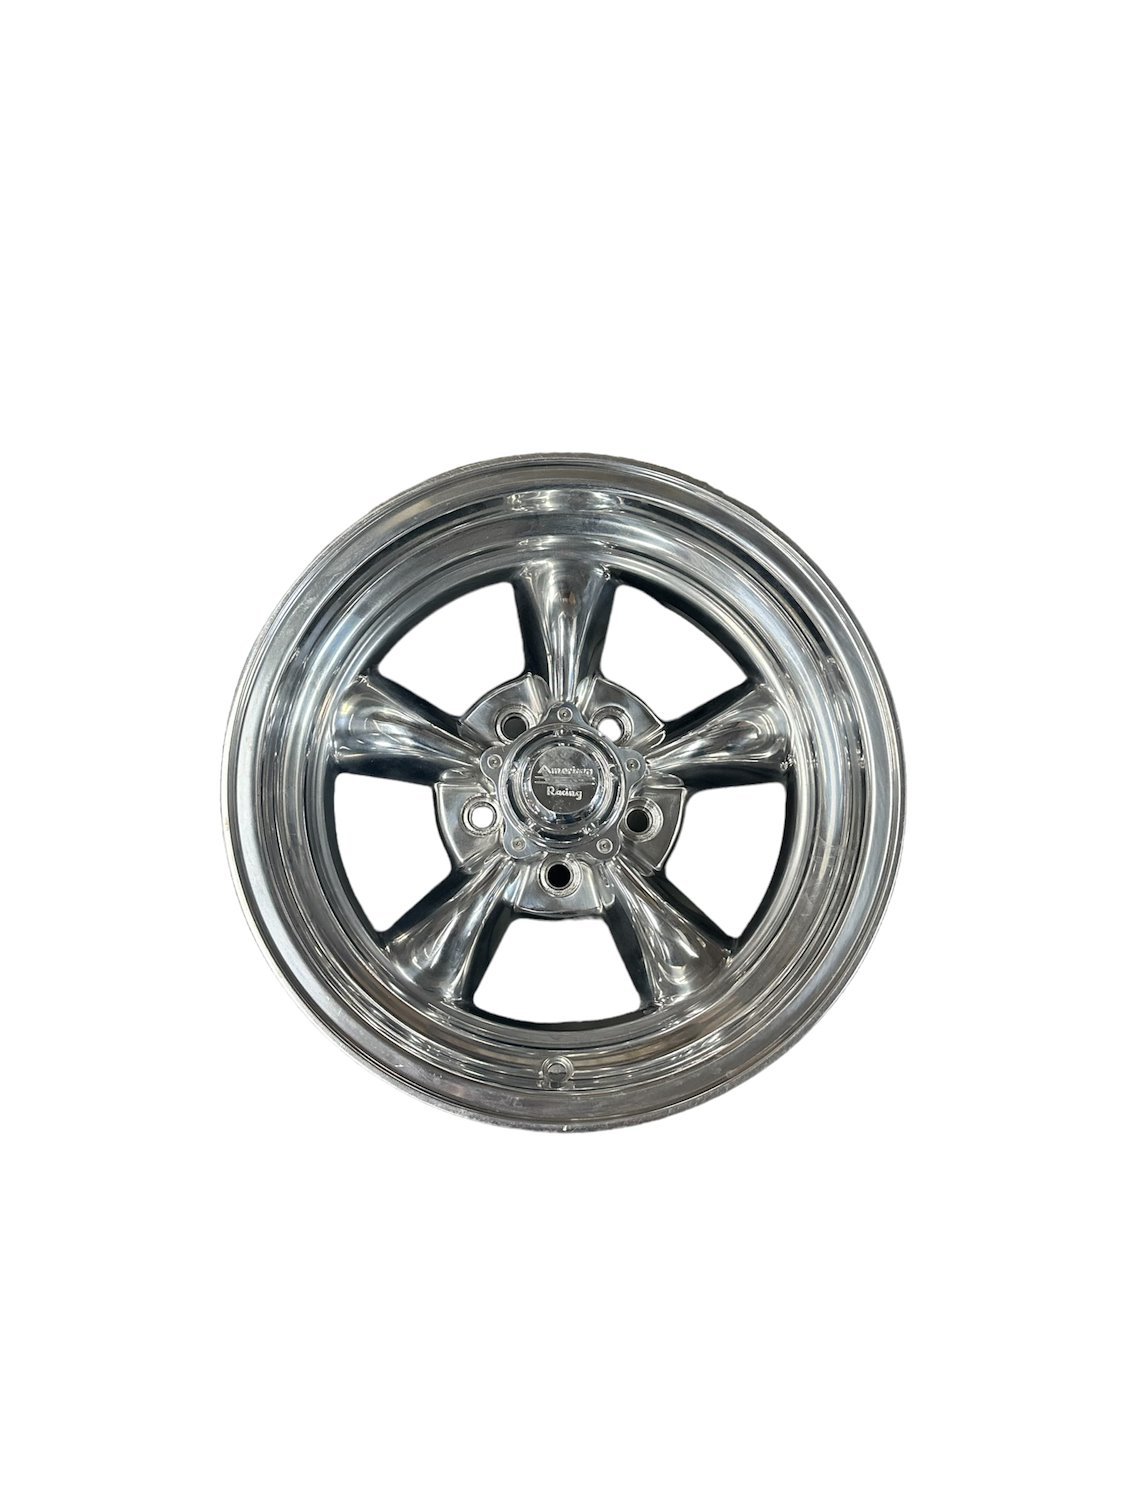 *BLEM VN515 Series Classic Torq-Thrust II Wheel Size: